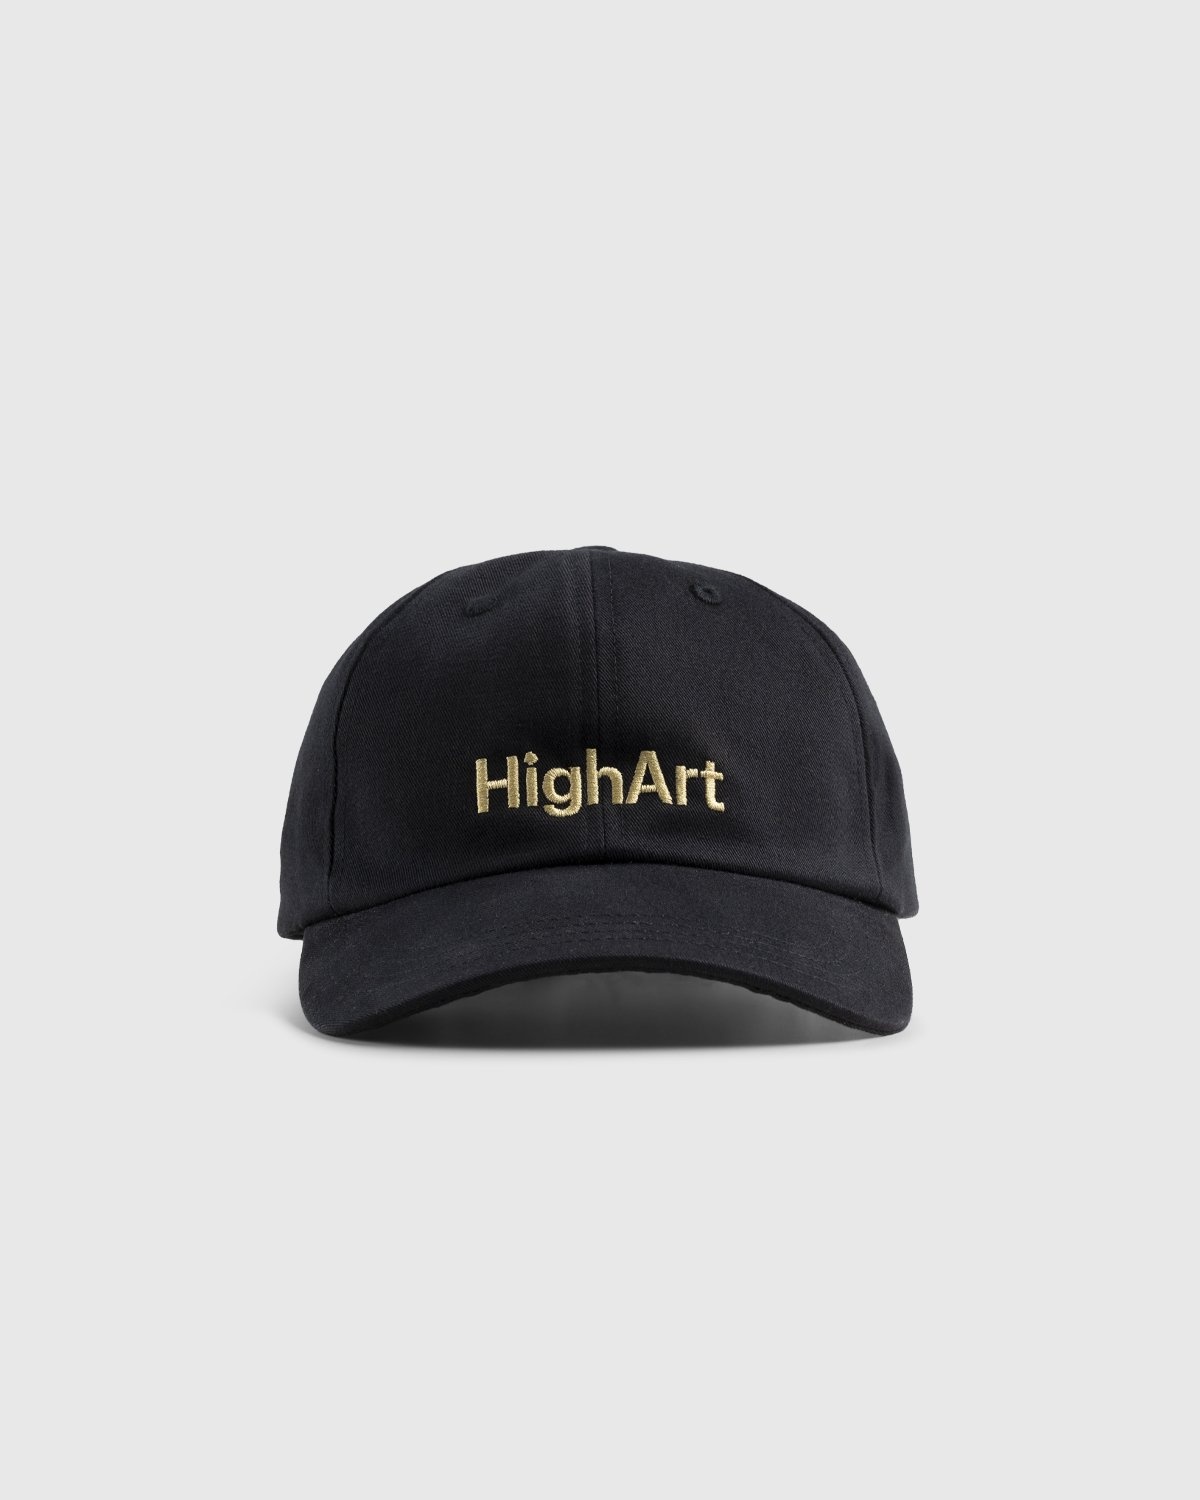 Highsnobiety – HIGHArt Cap Black - Caps - Black - Image 2